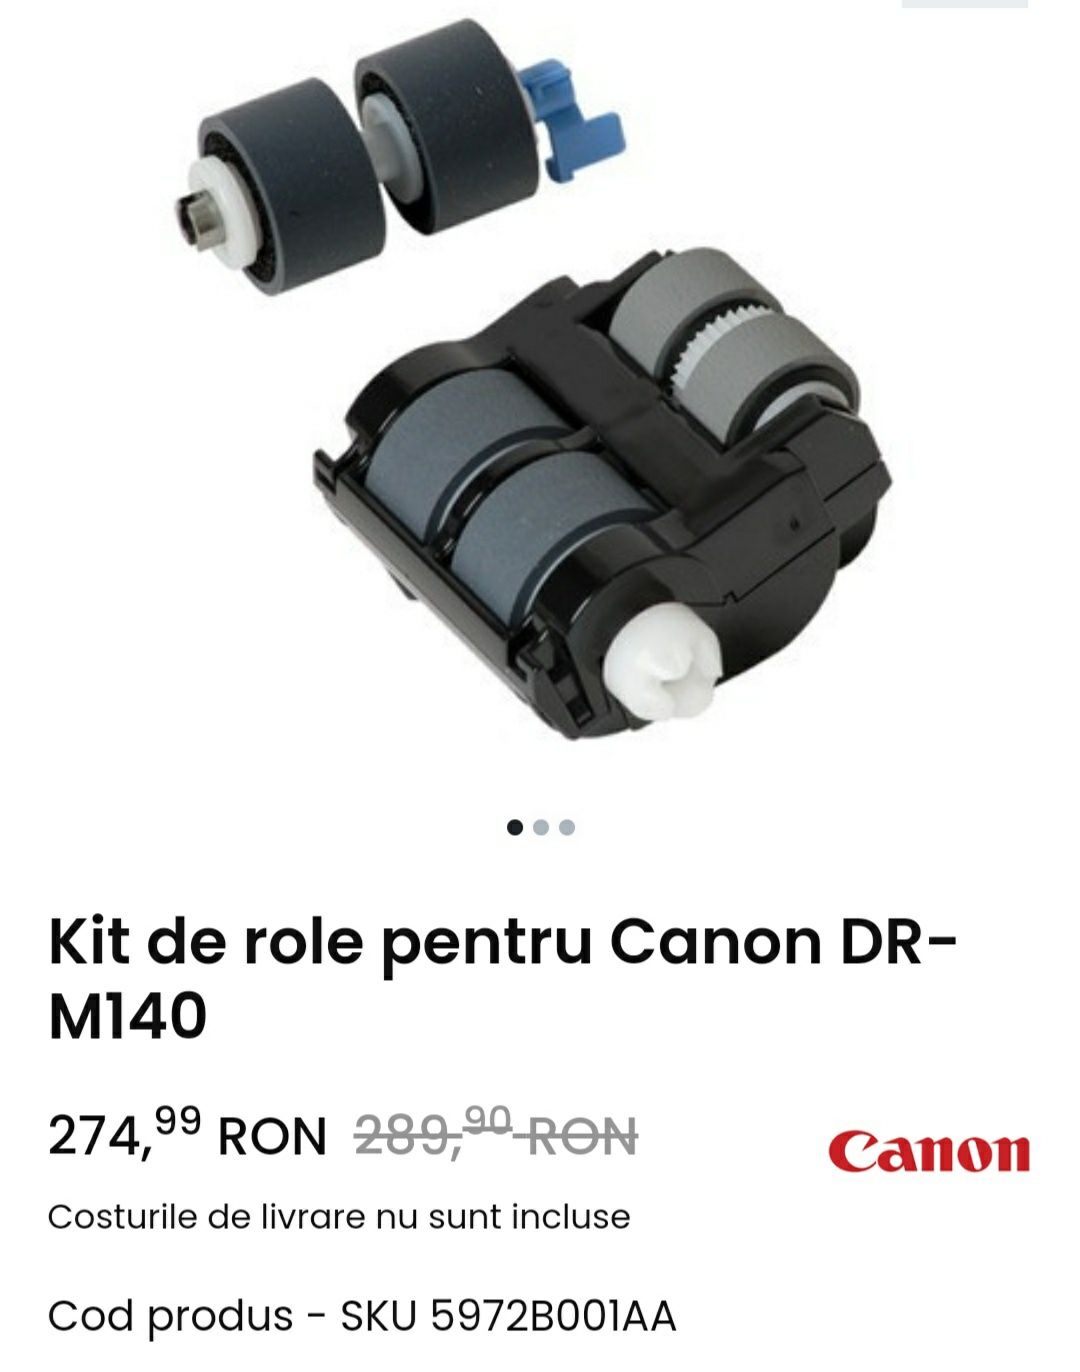 Kit de role pentru Canon DR-M140
Ki